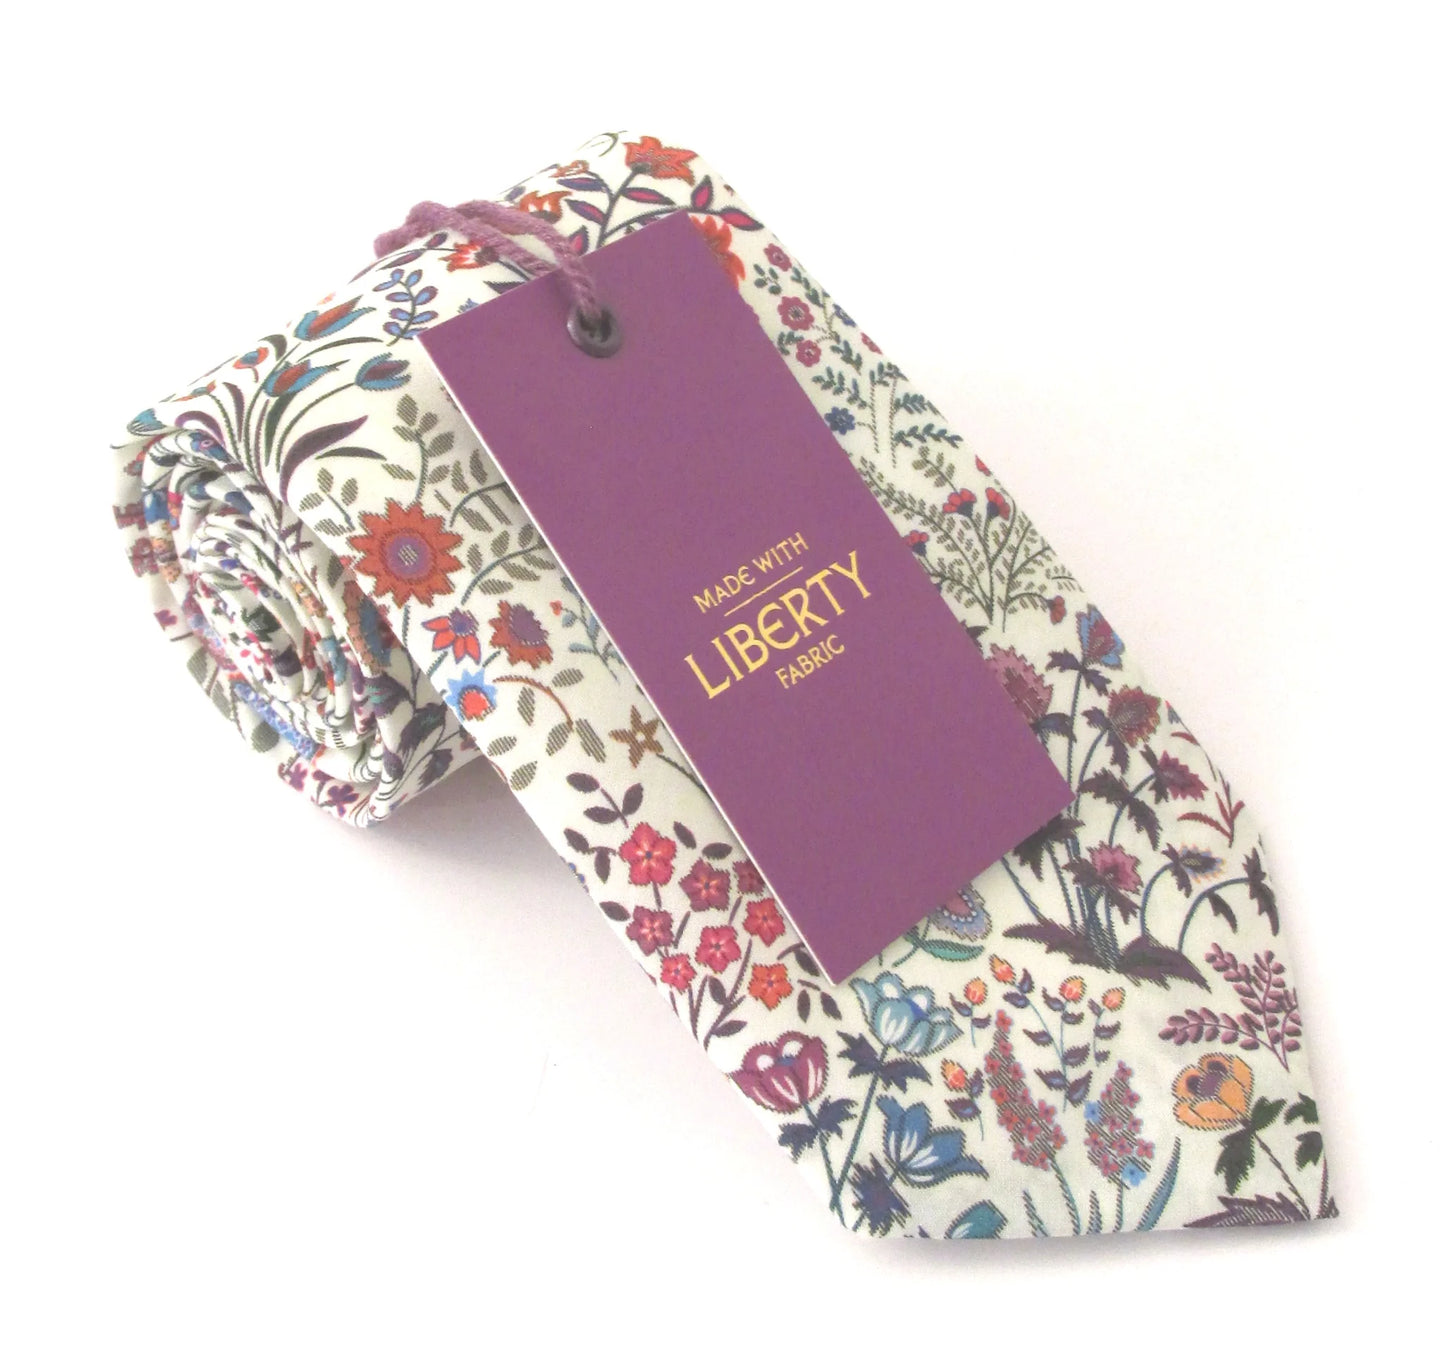 Shepherdly Song Liberty fabric tie by Van Buck